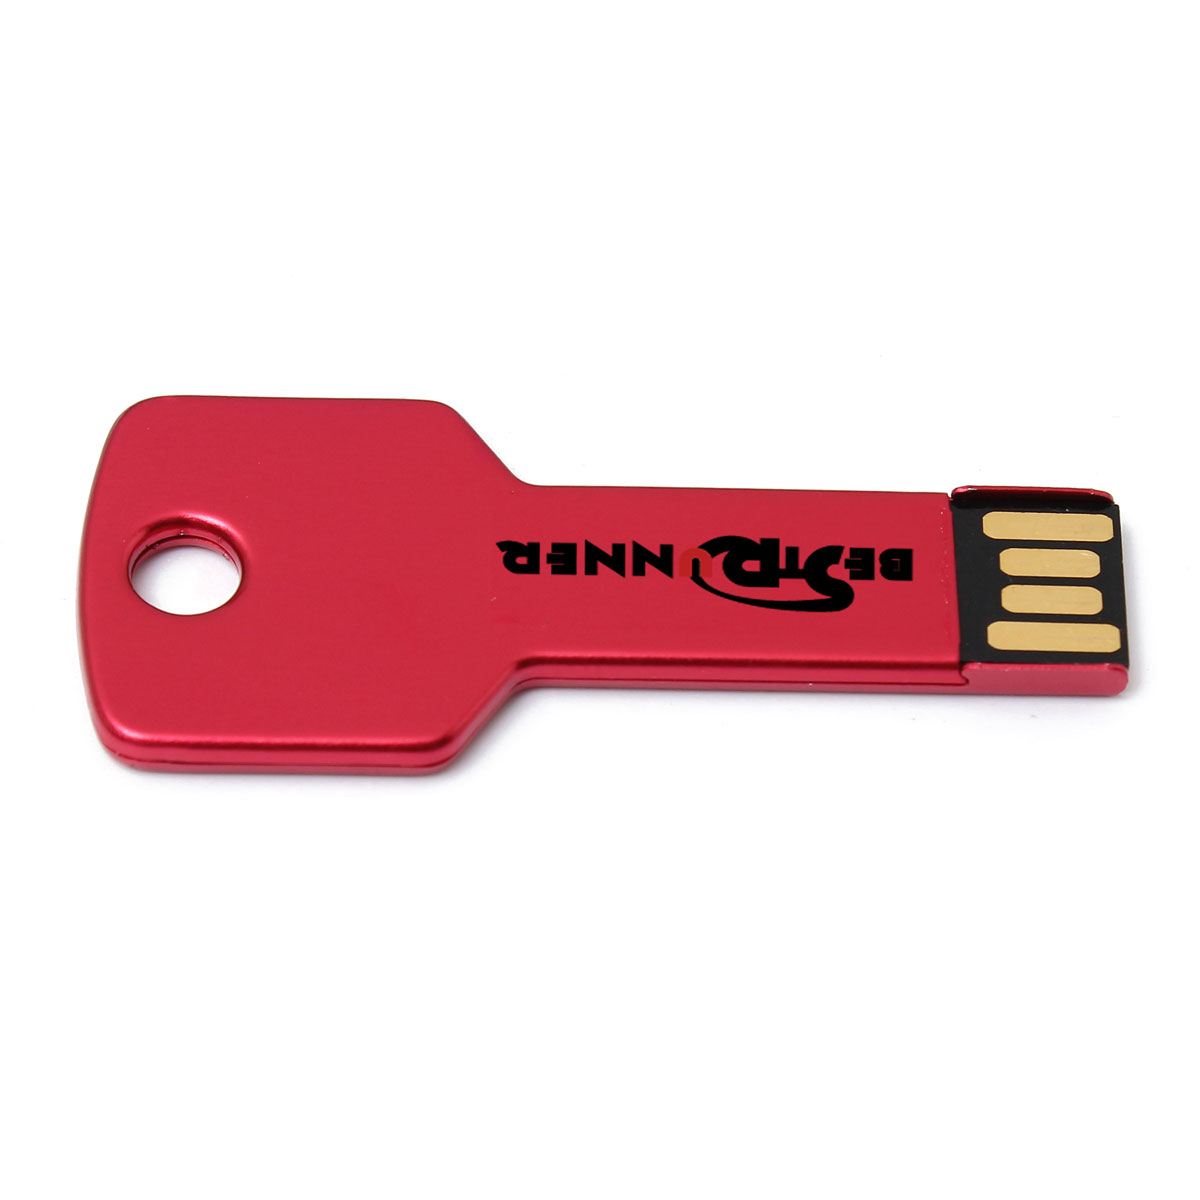 Bestrunner 2GB USB Metal Key Drive Flash Memory Drive Thumb Design 14